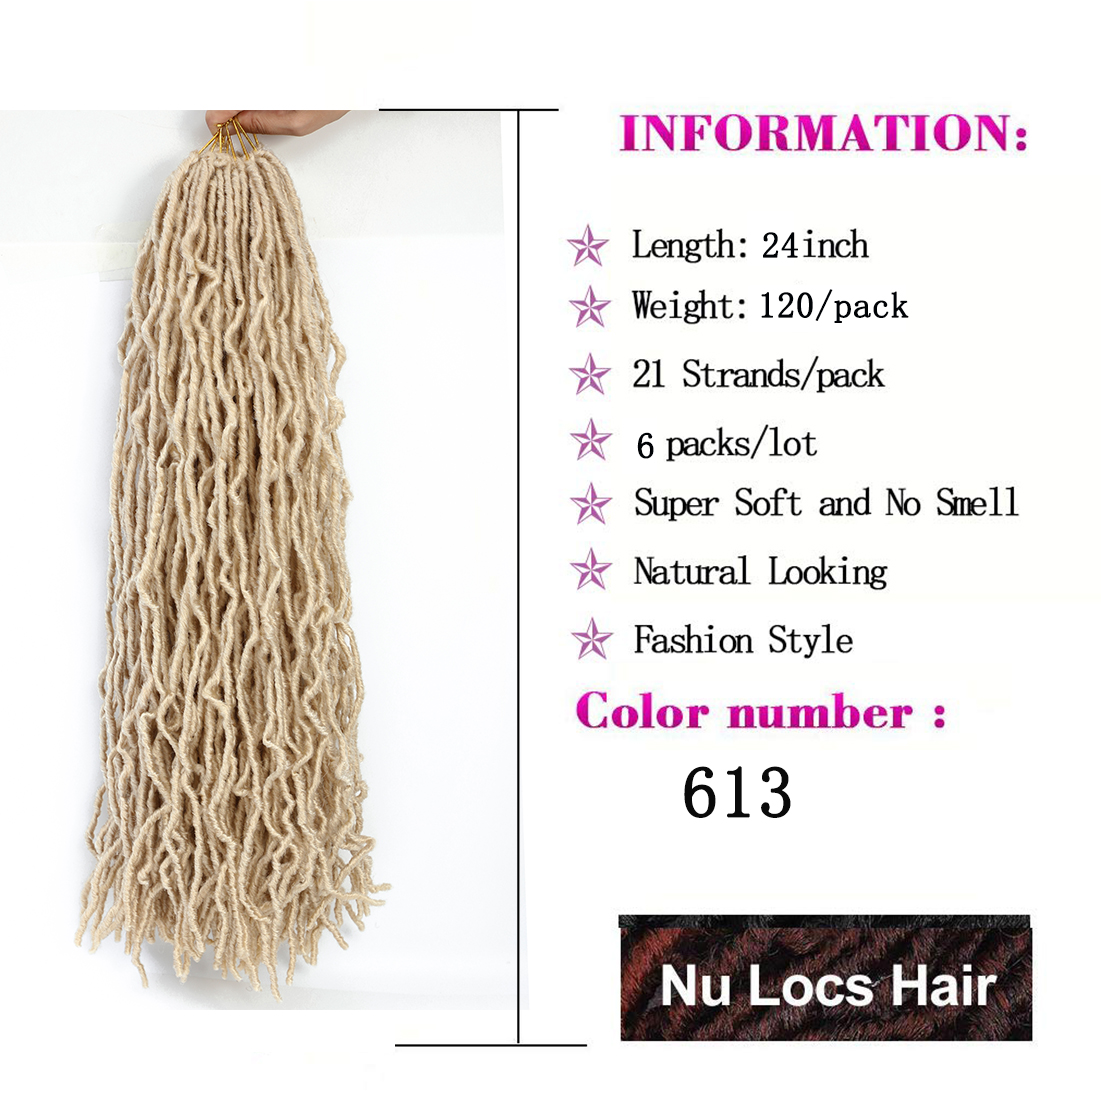 I&K Nu Faux Locs Hair 6 packs 24 Inch - #613